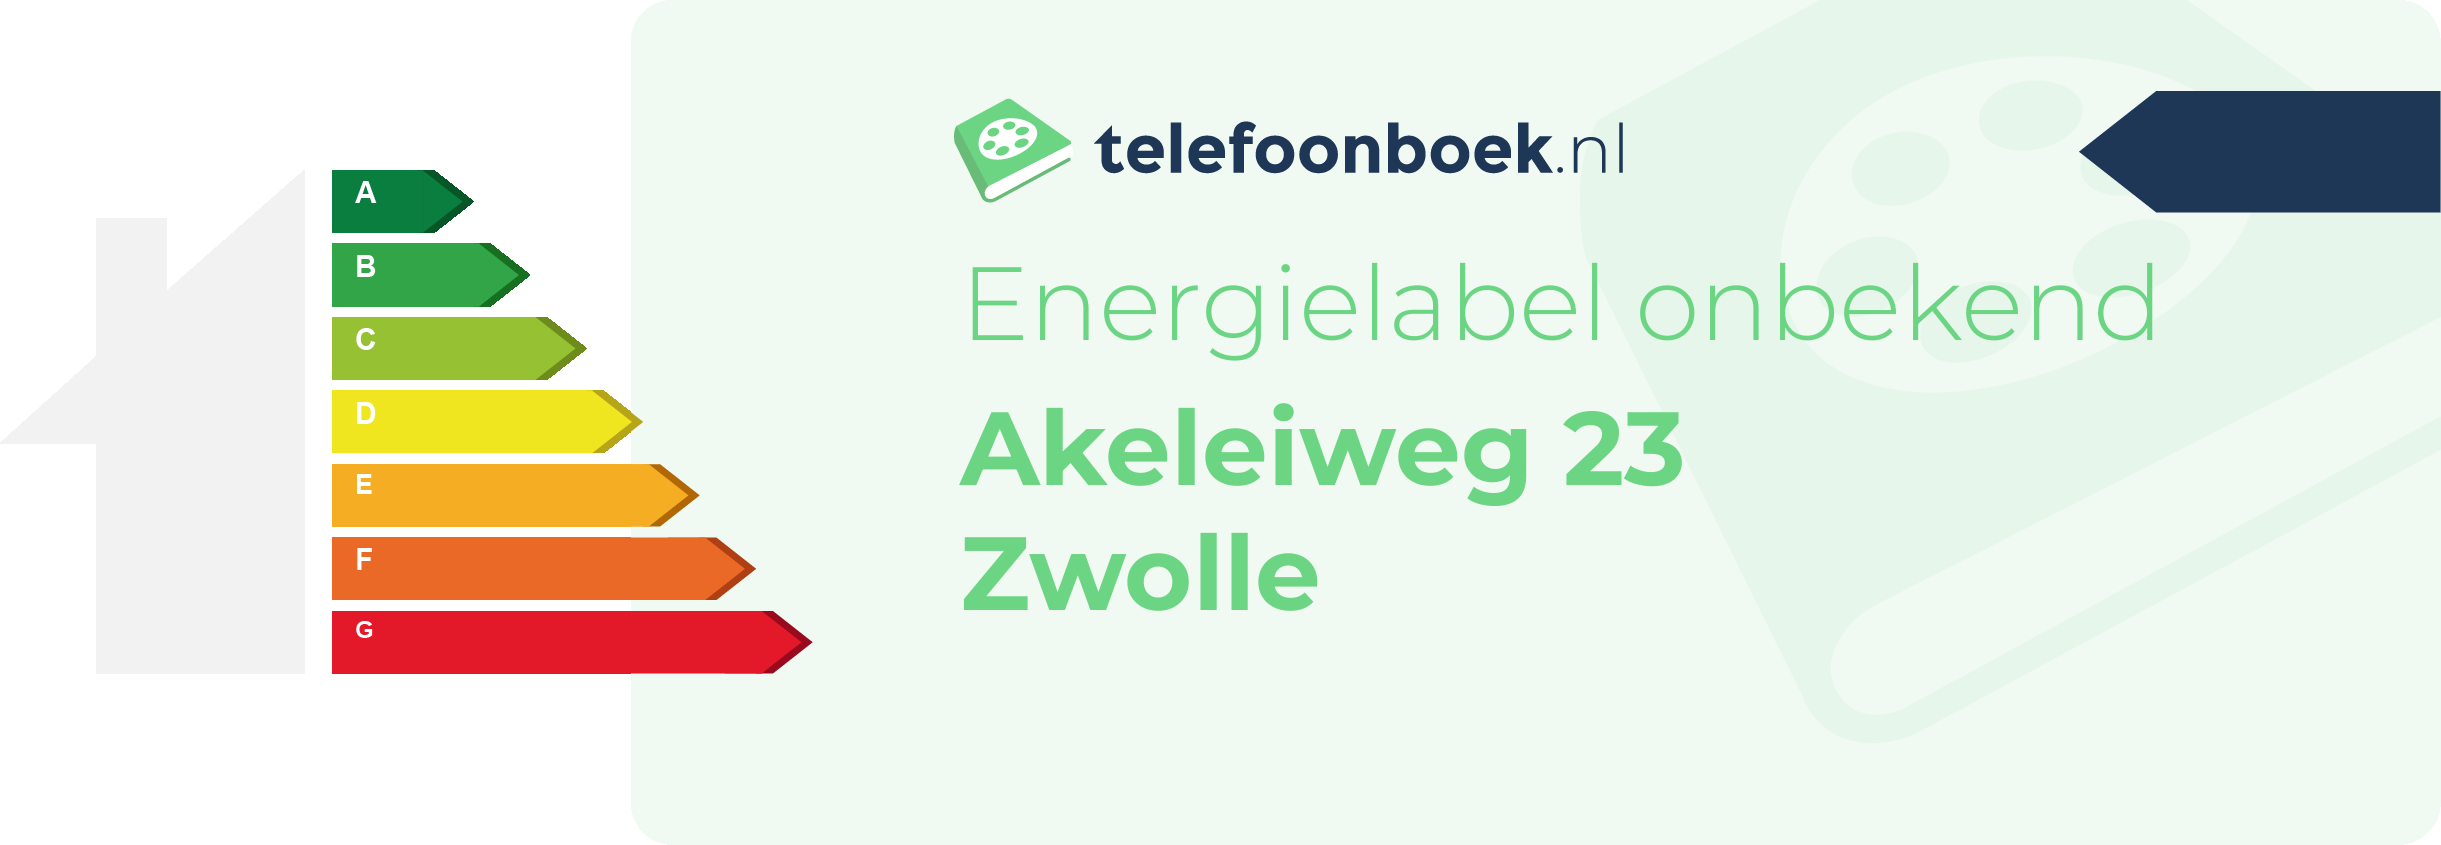 Energielabel Akeleiweg 23 Zwolle